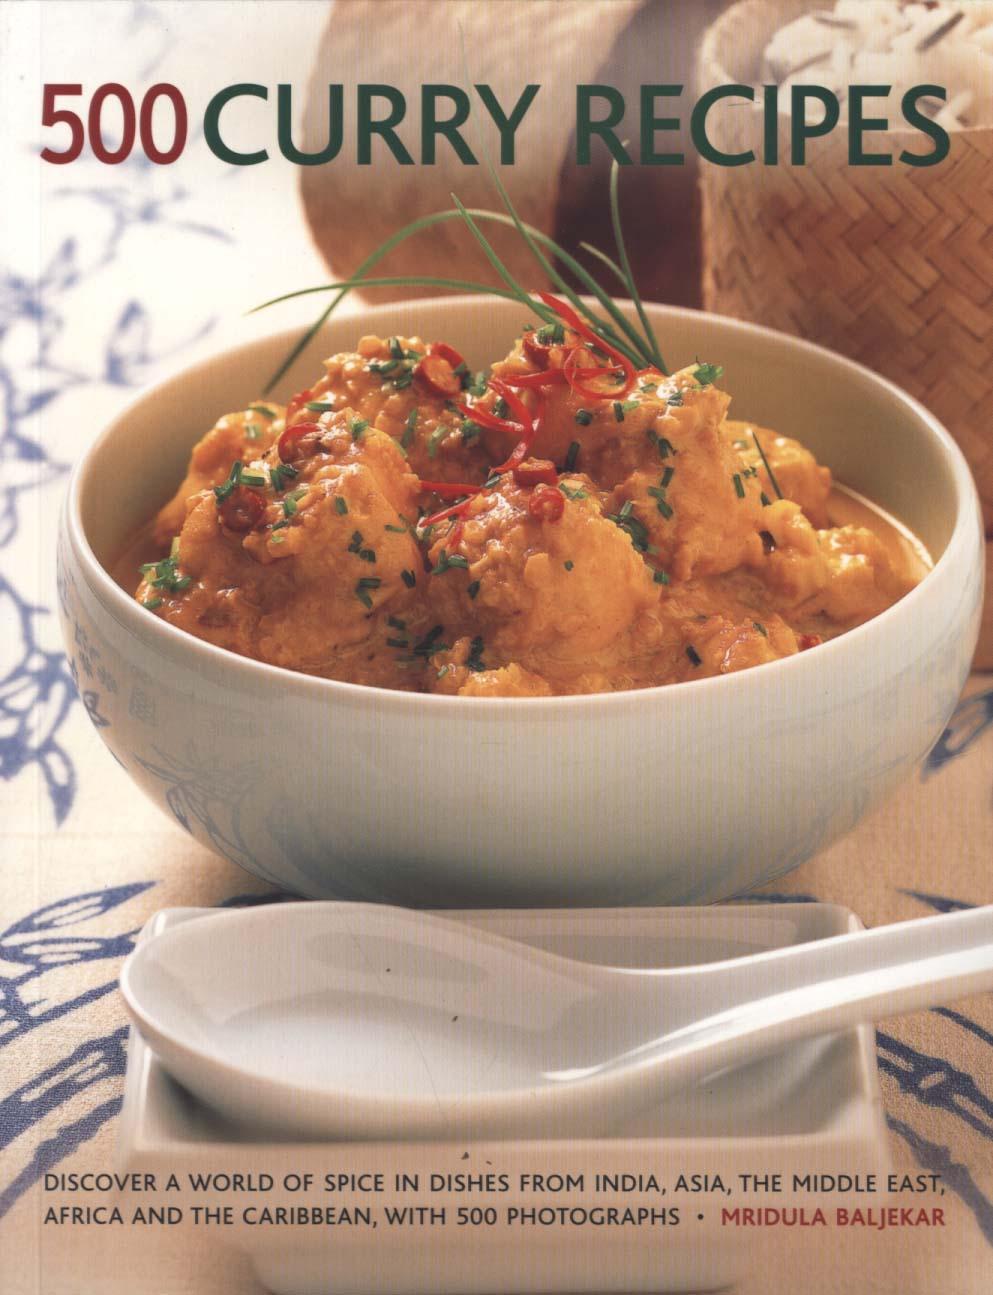 500 Curry Recipes - Mridula Baljekar